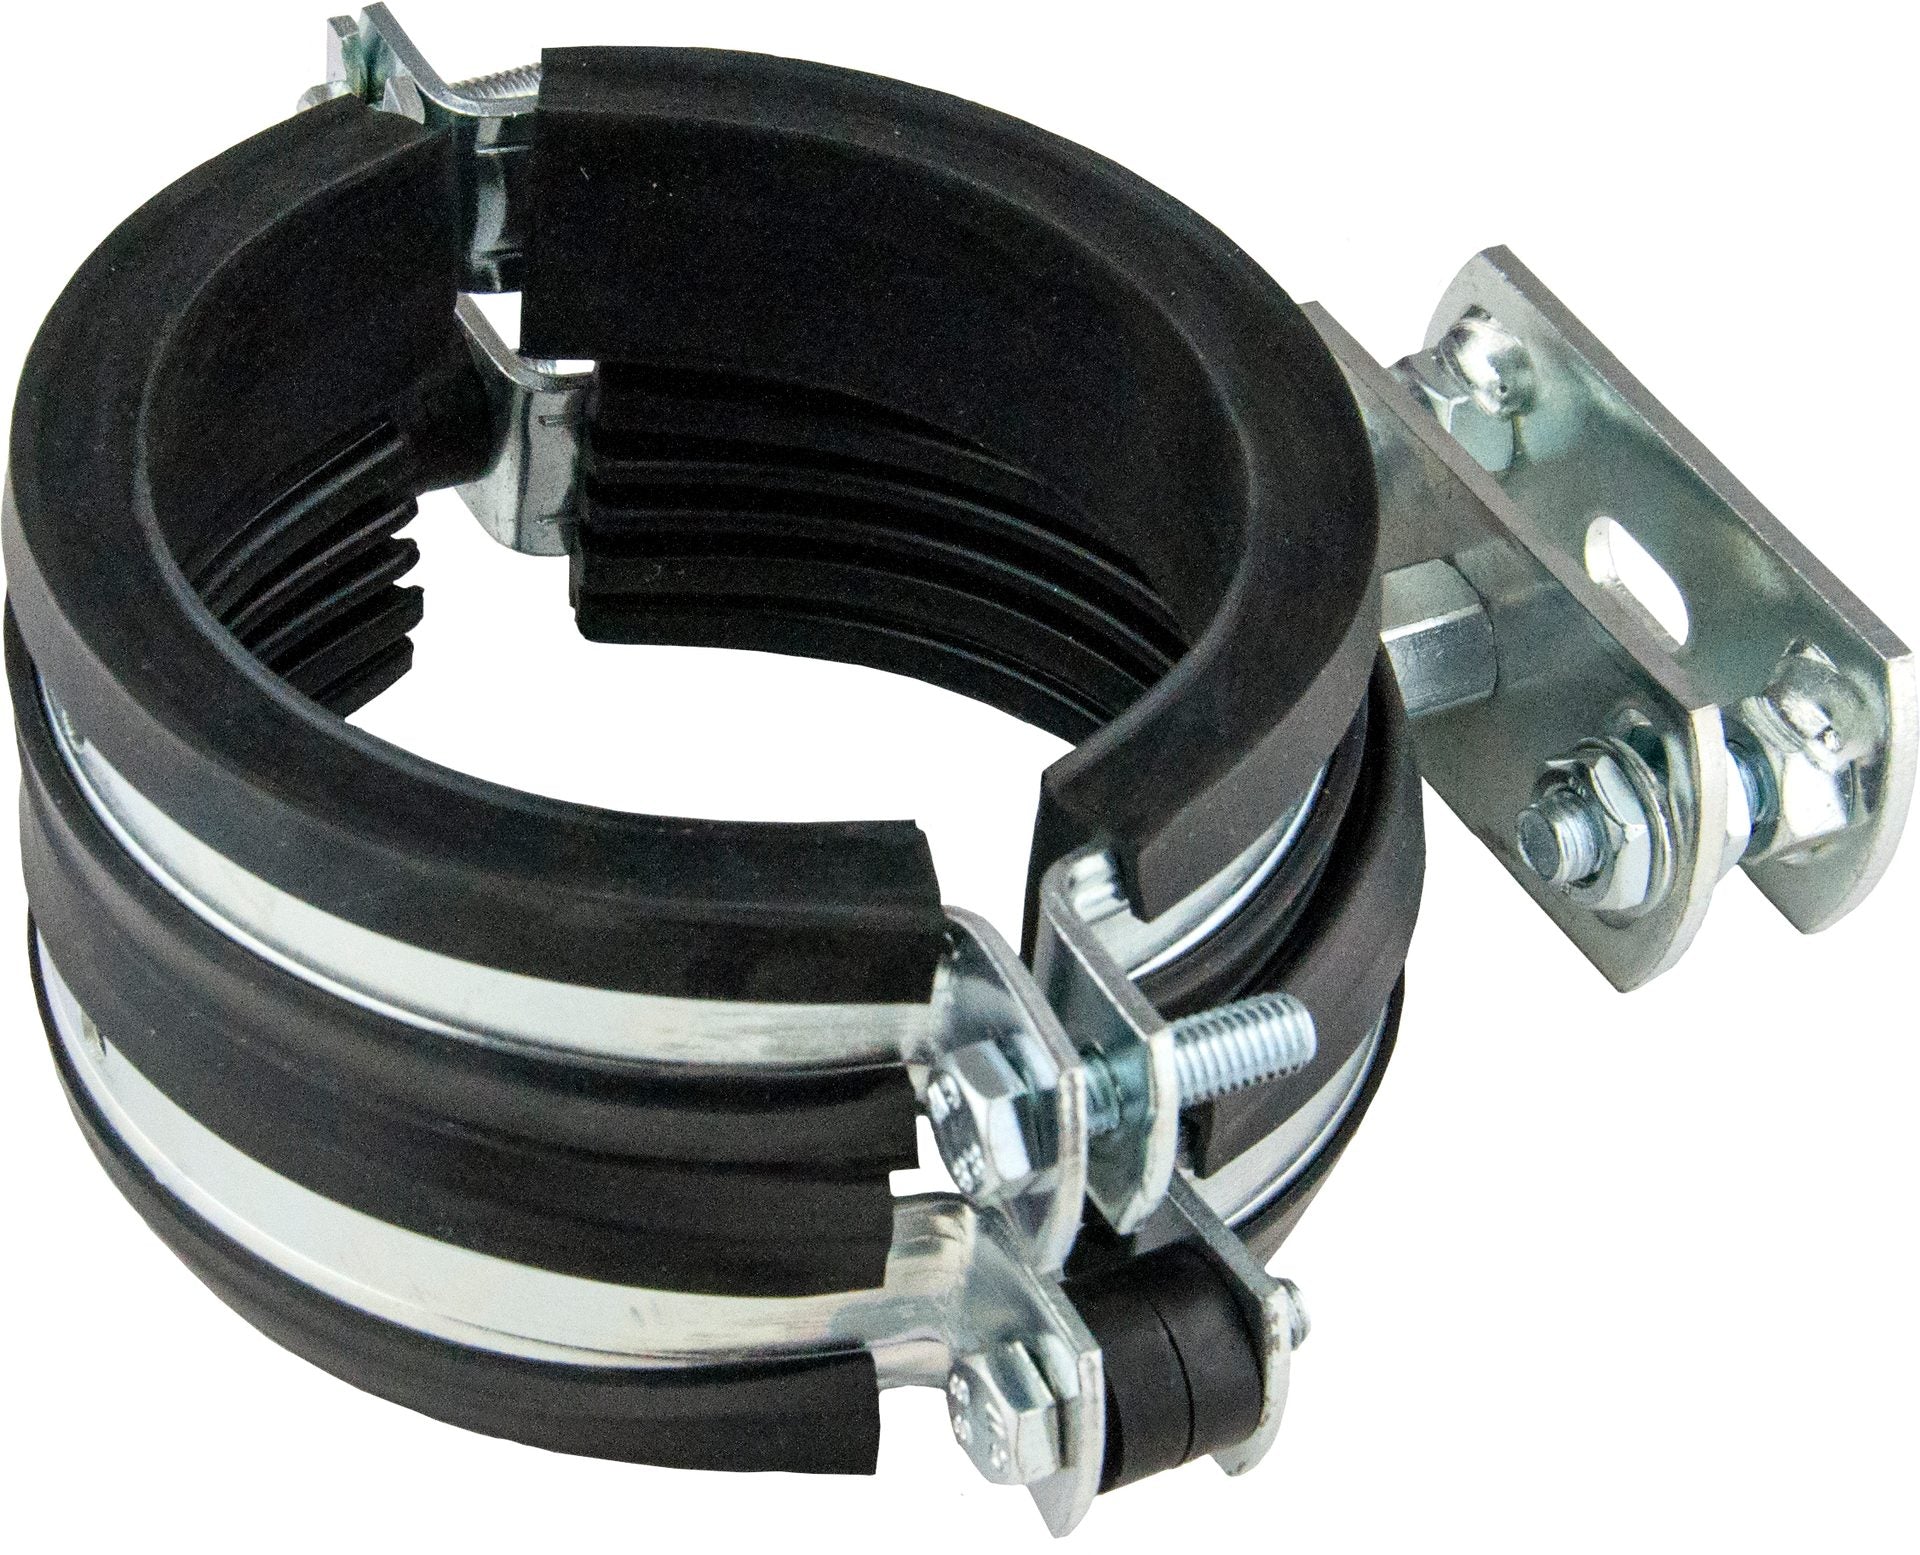 Pipe clip for Indoor drainage Kaczmarek PP BISMAT 1000 EPDM 108 - 116 mm